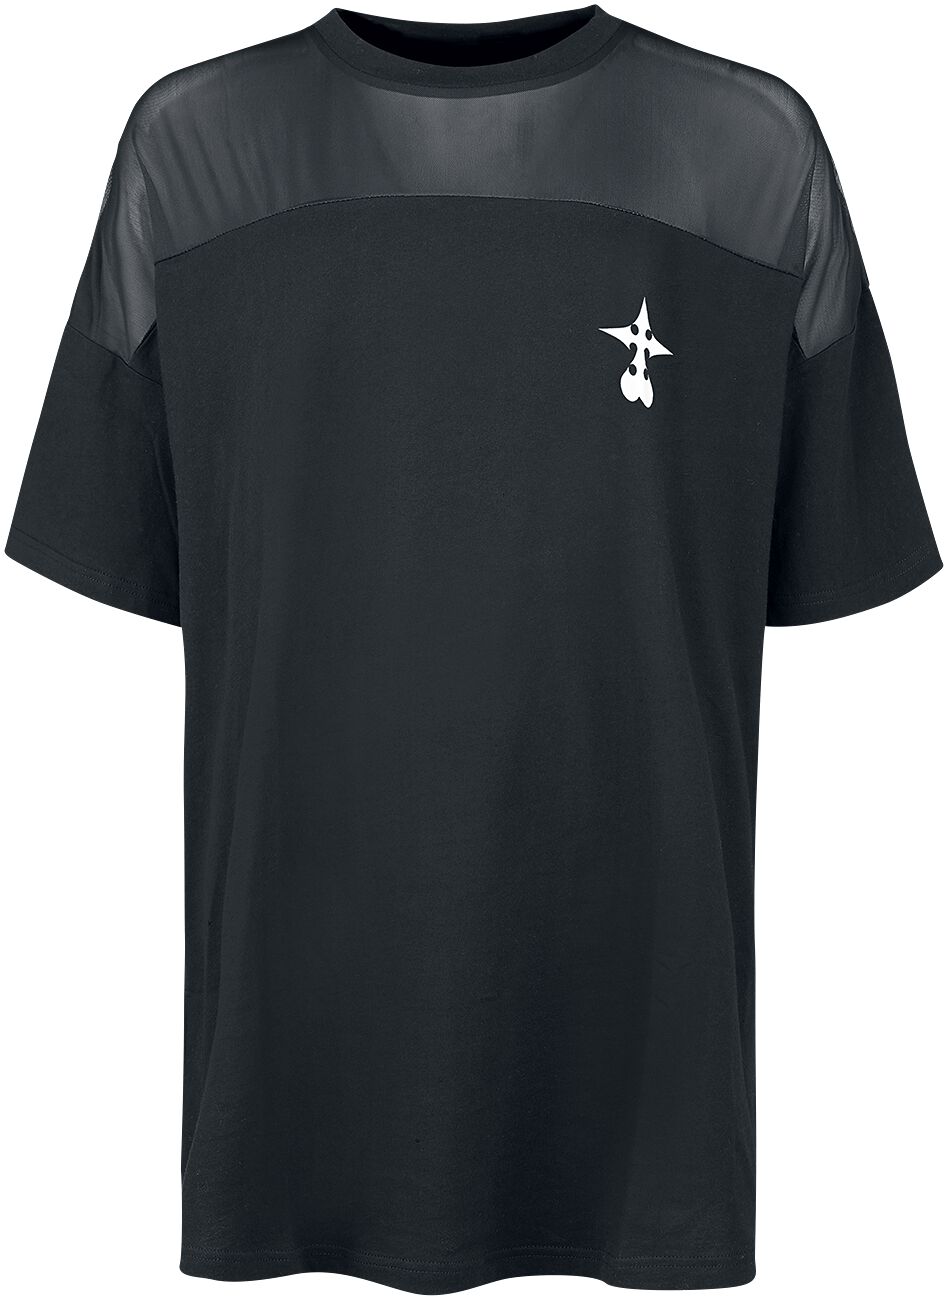 Kingdom Hearts Organisation XIII T-Shirt schwarz in L